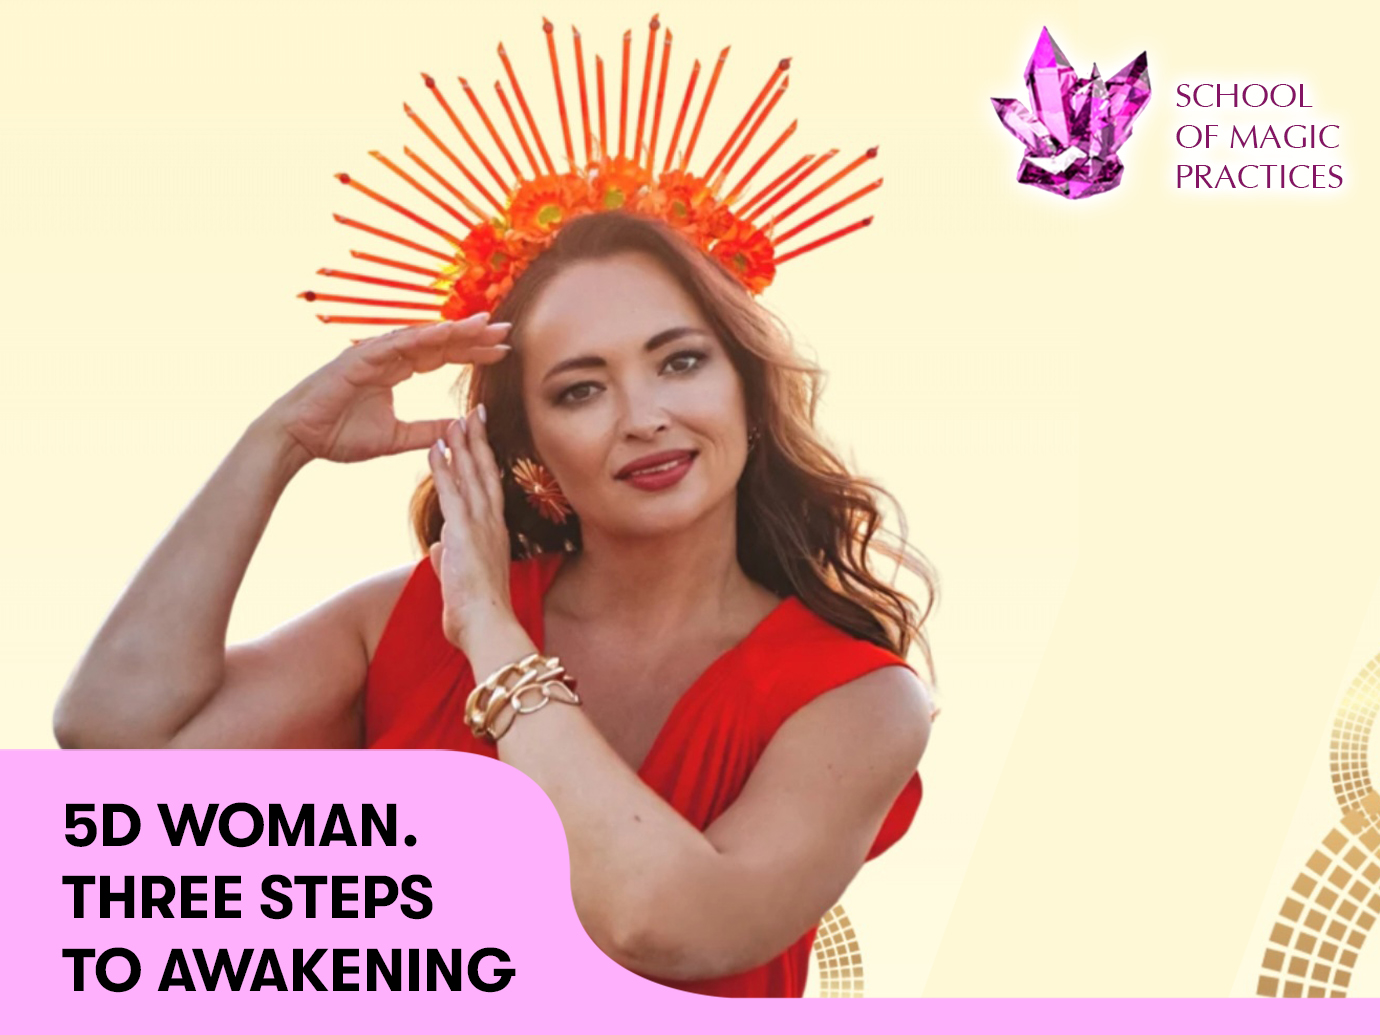 A 5D woman. Three Steps to Awakening